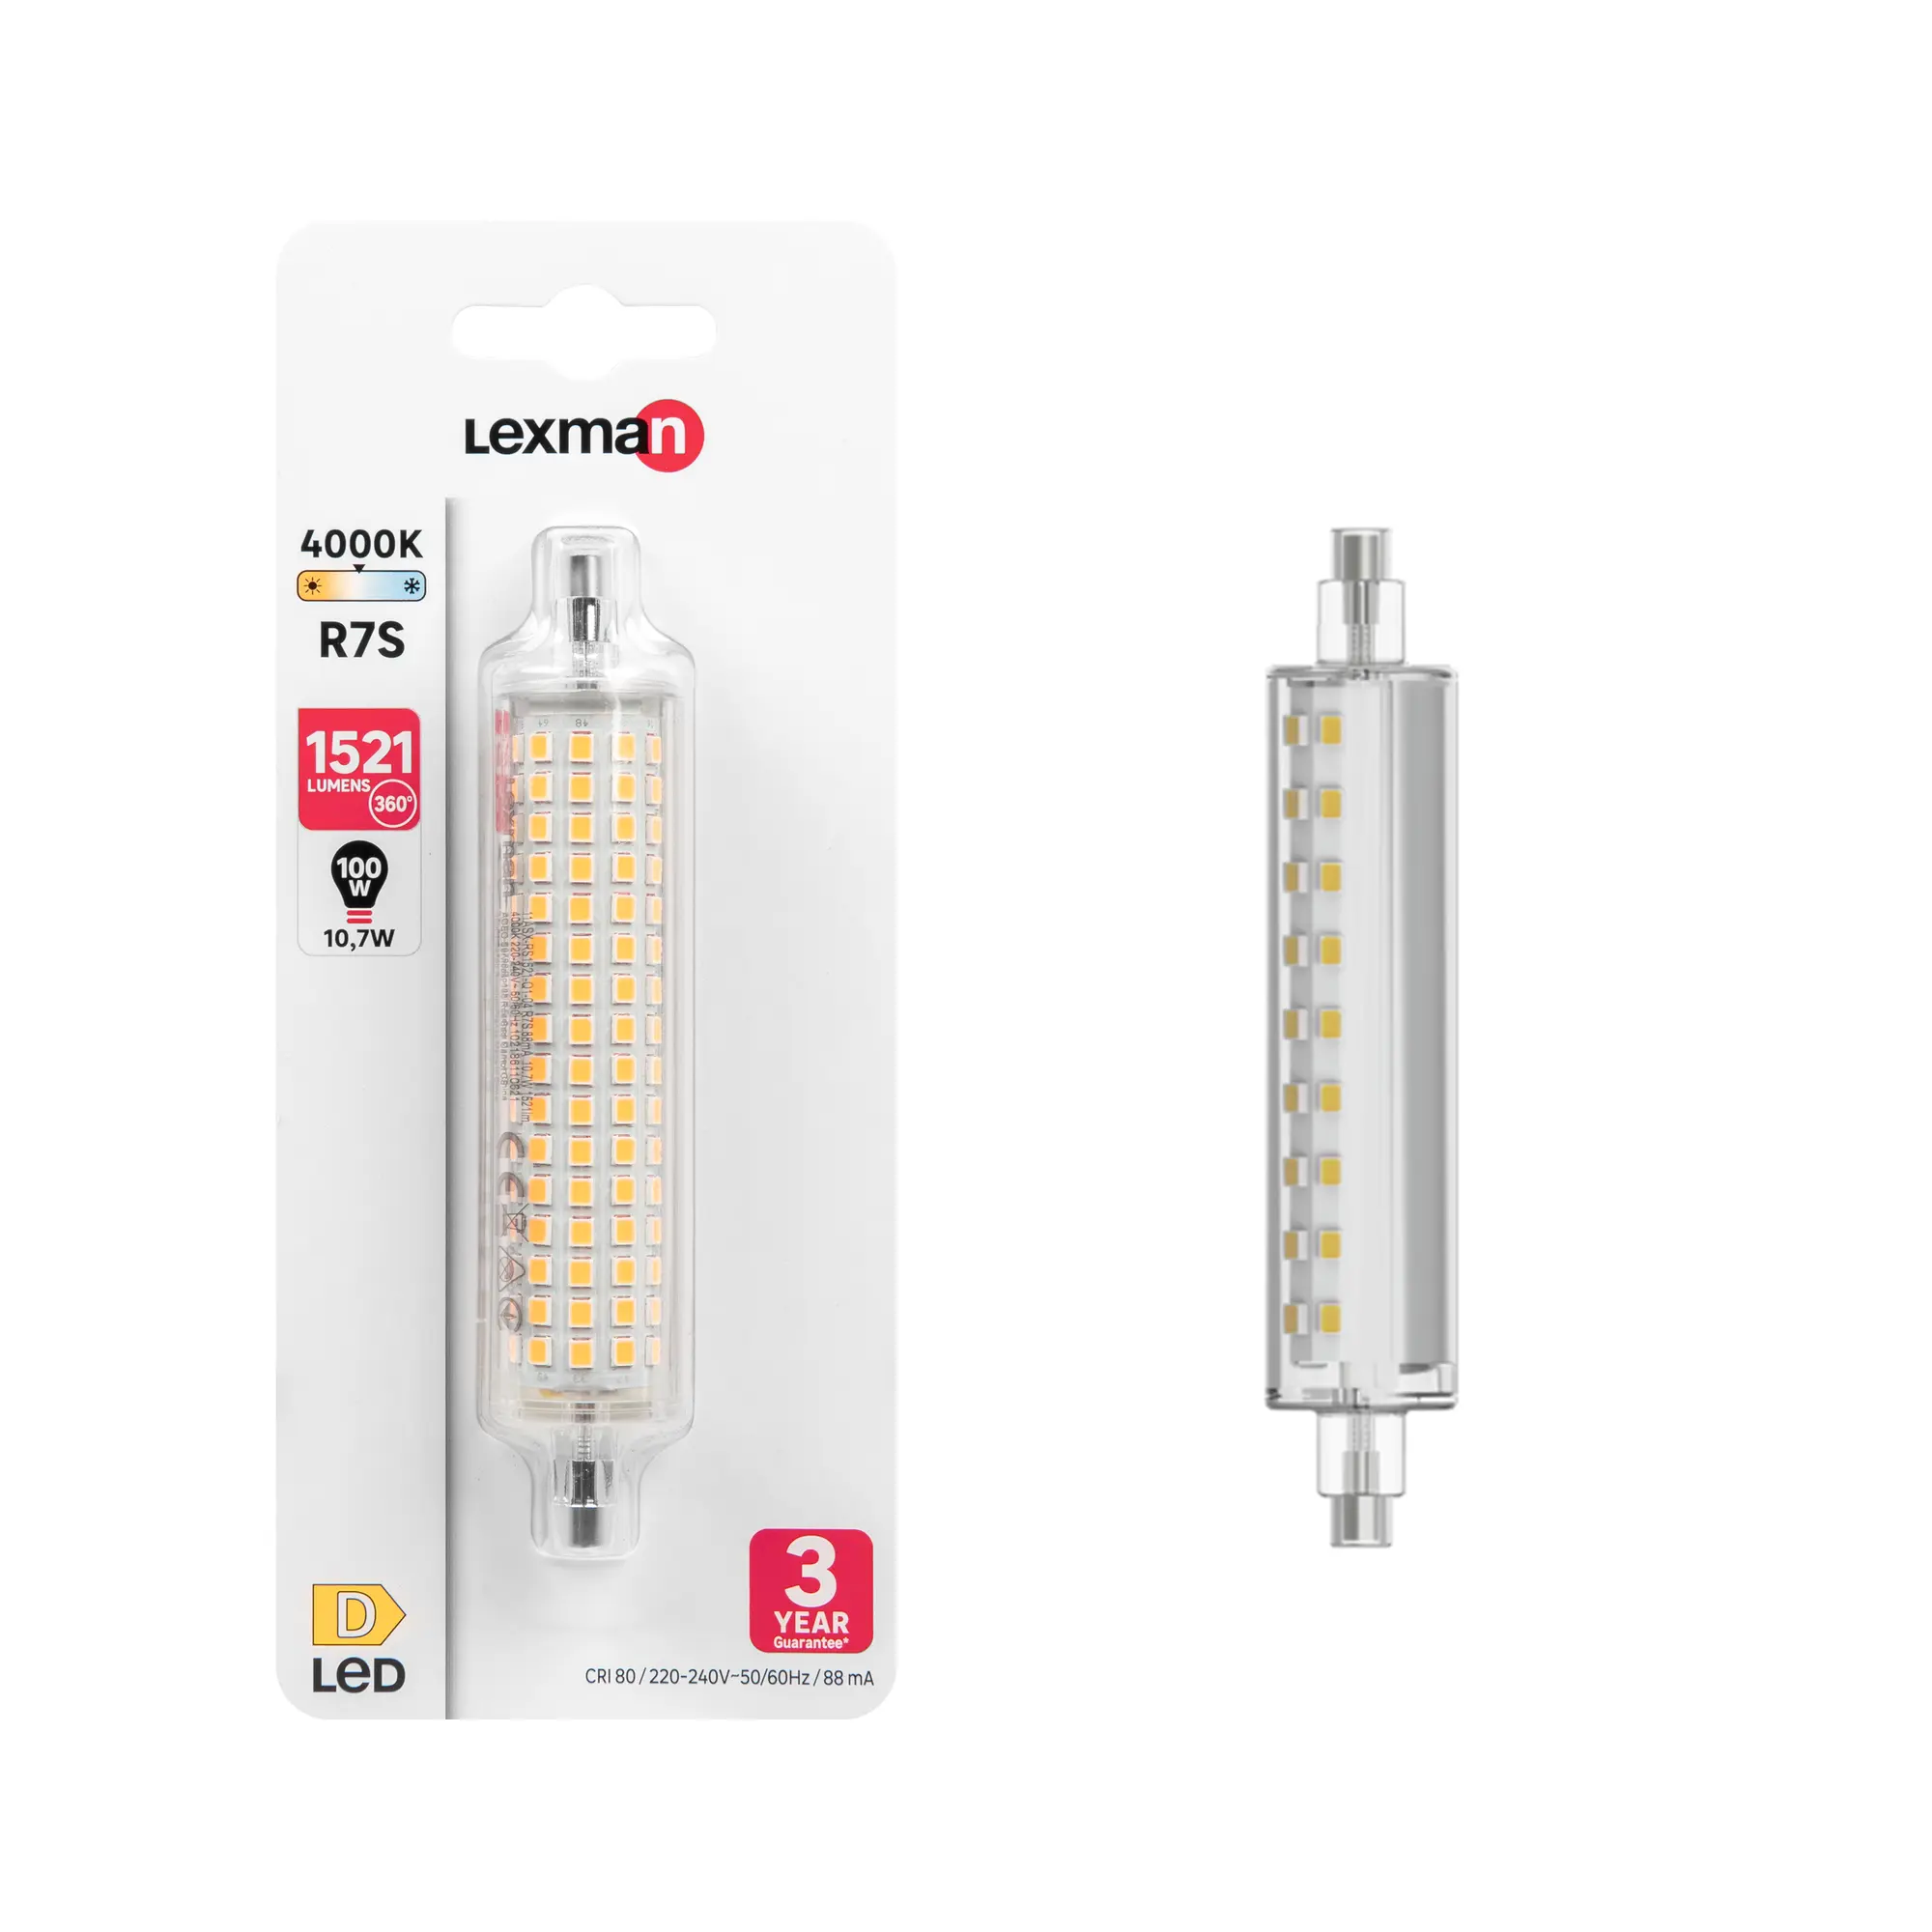 lb Fuente formar Bombilla LED LEXMAN tubo casquillo R7S de 4000 K | Leroy Merlin